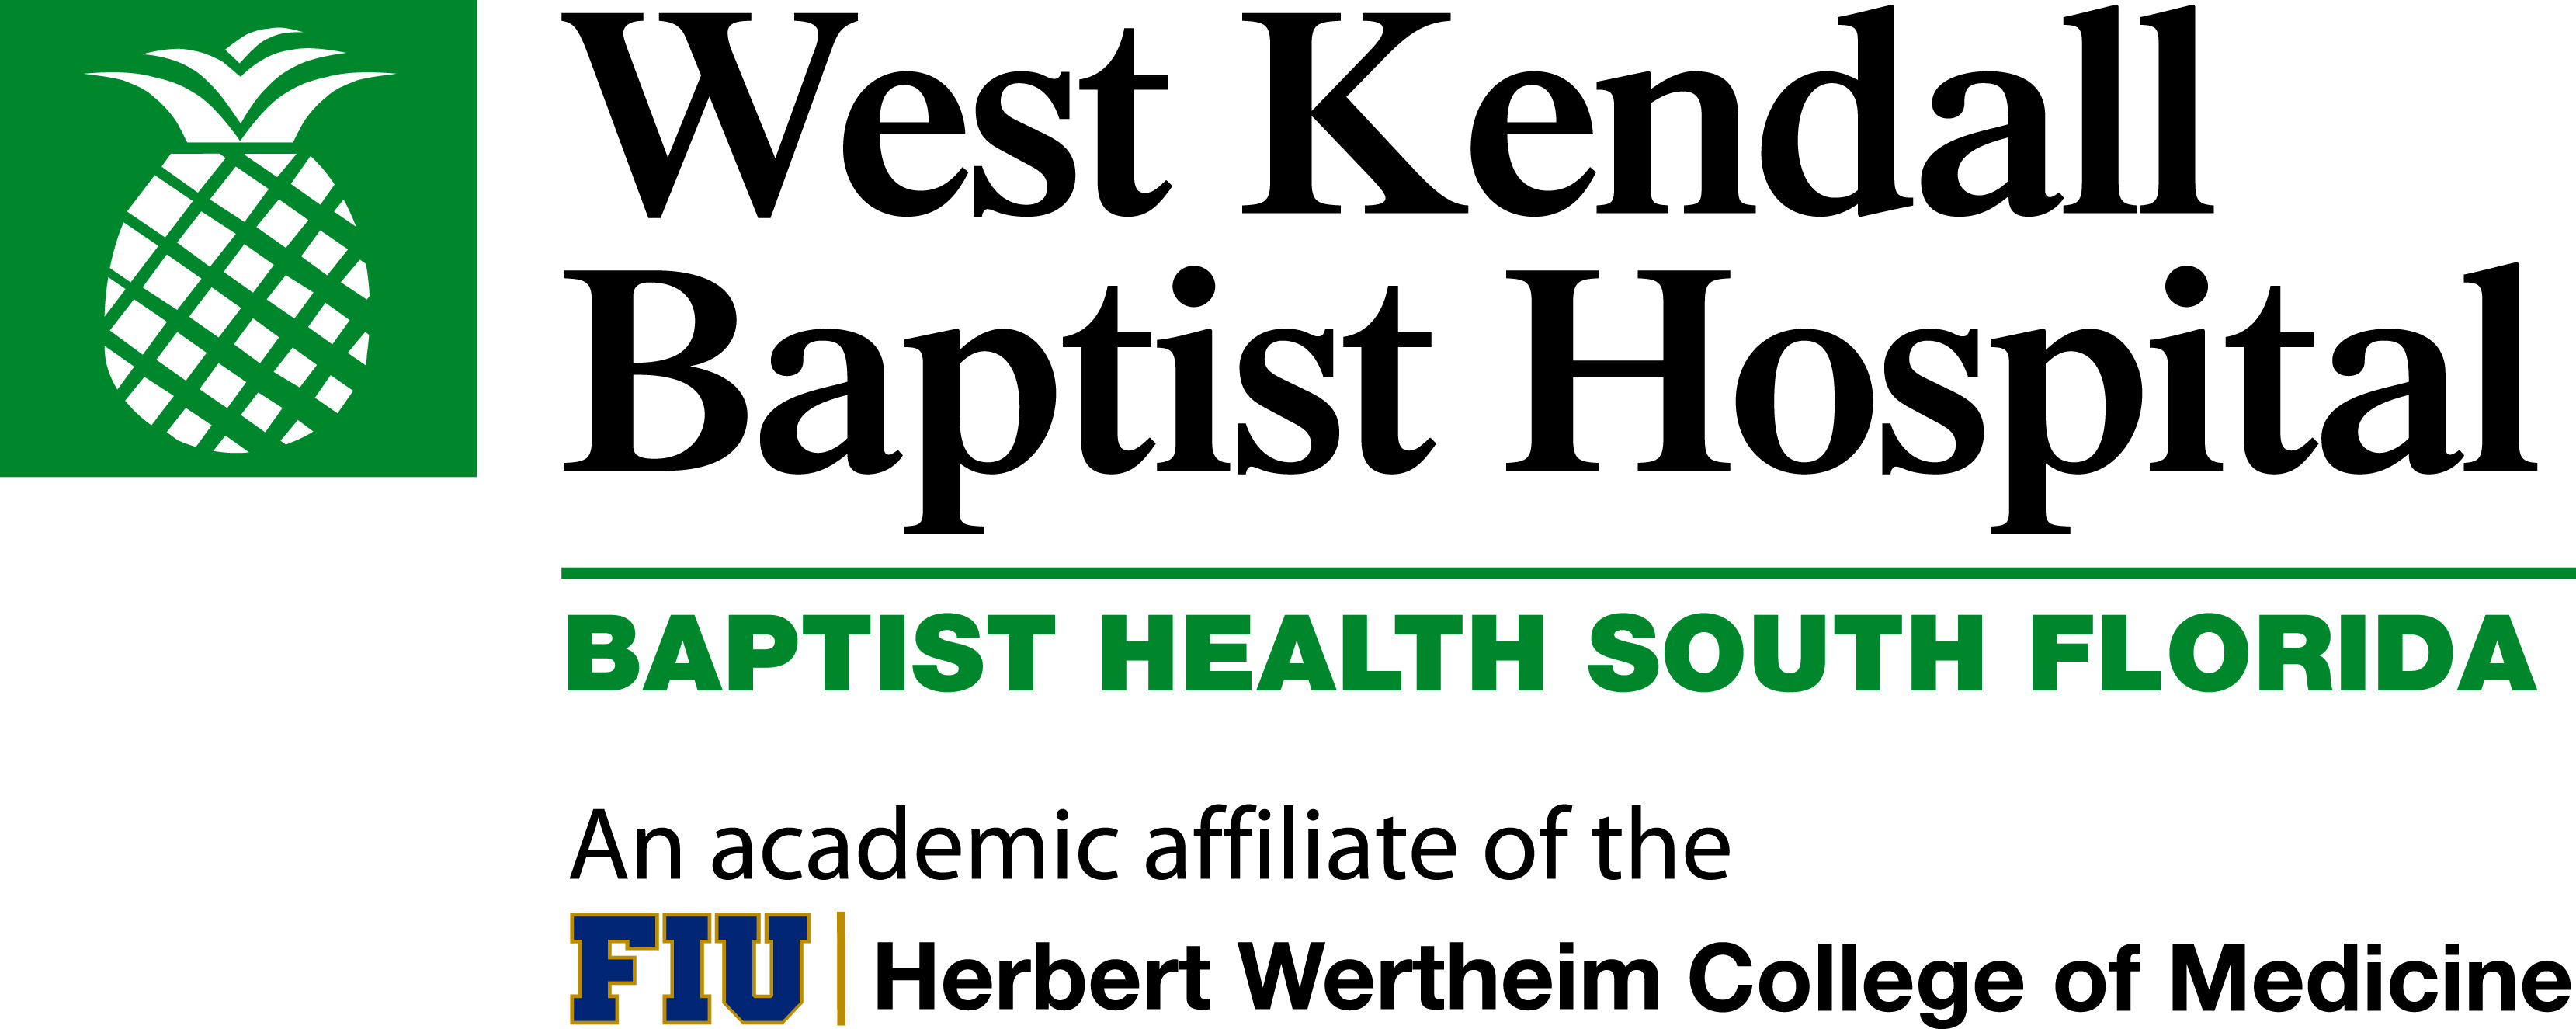 West Kendall Baptist Hospital logo